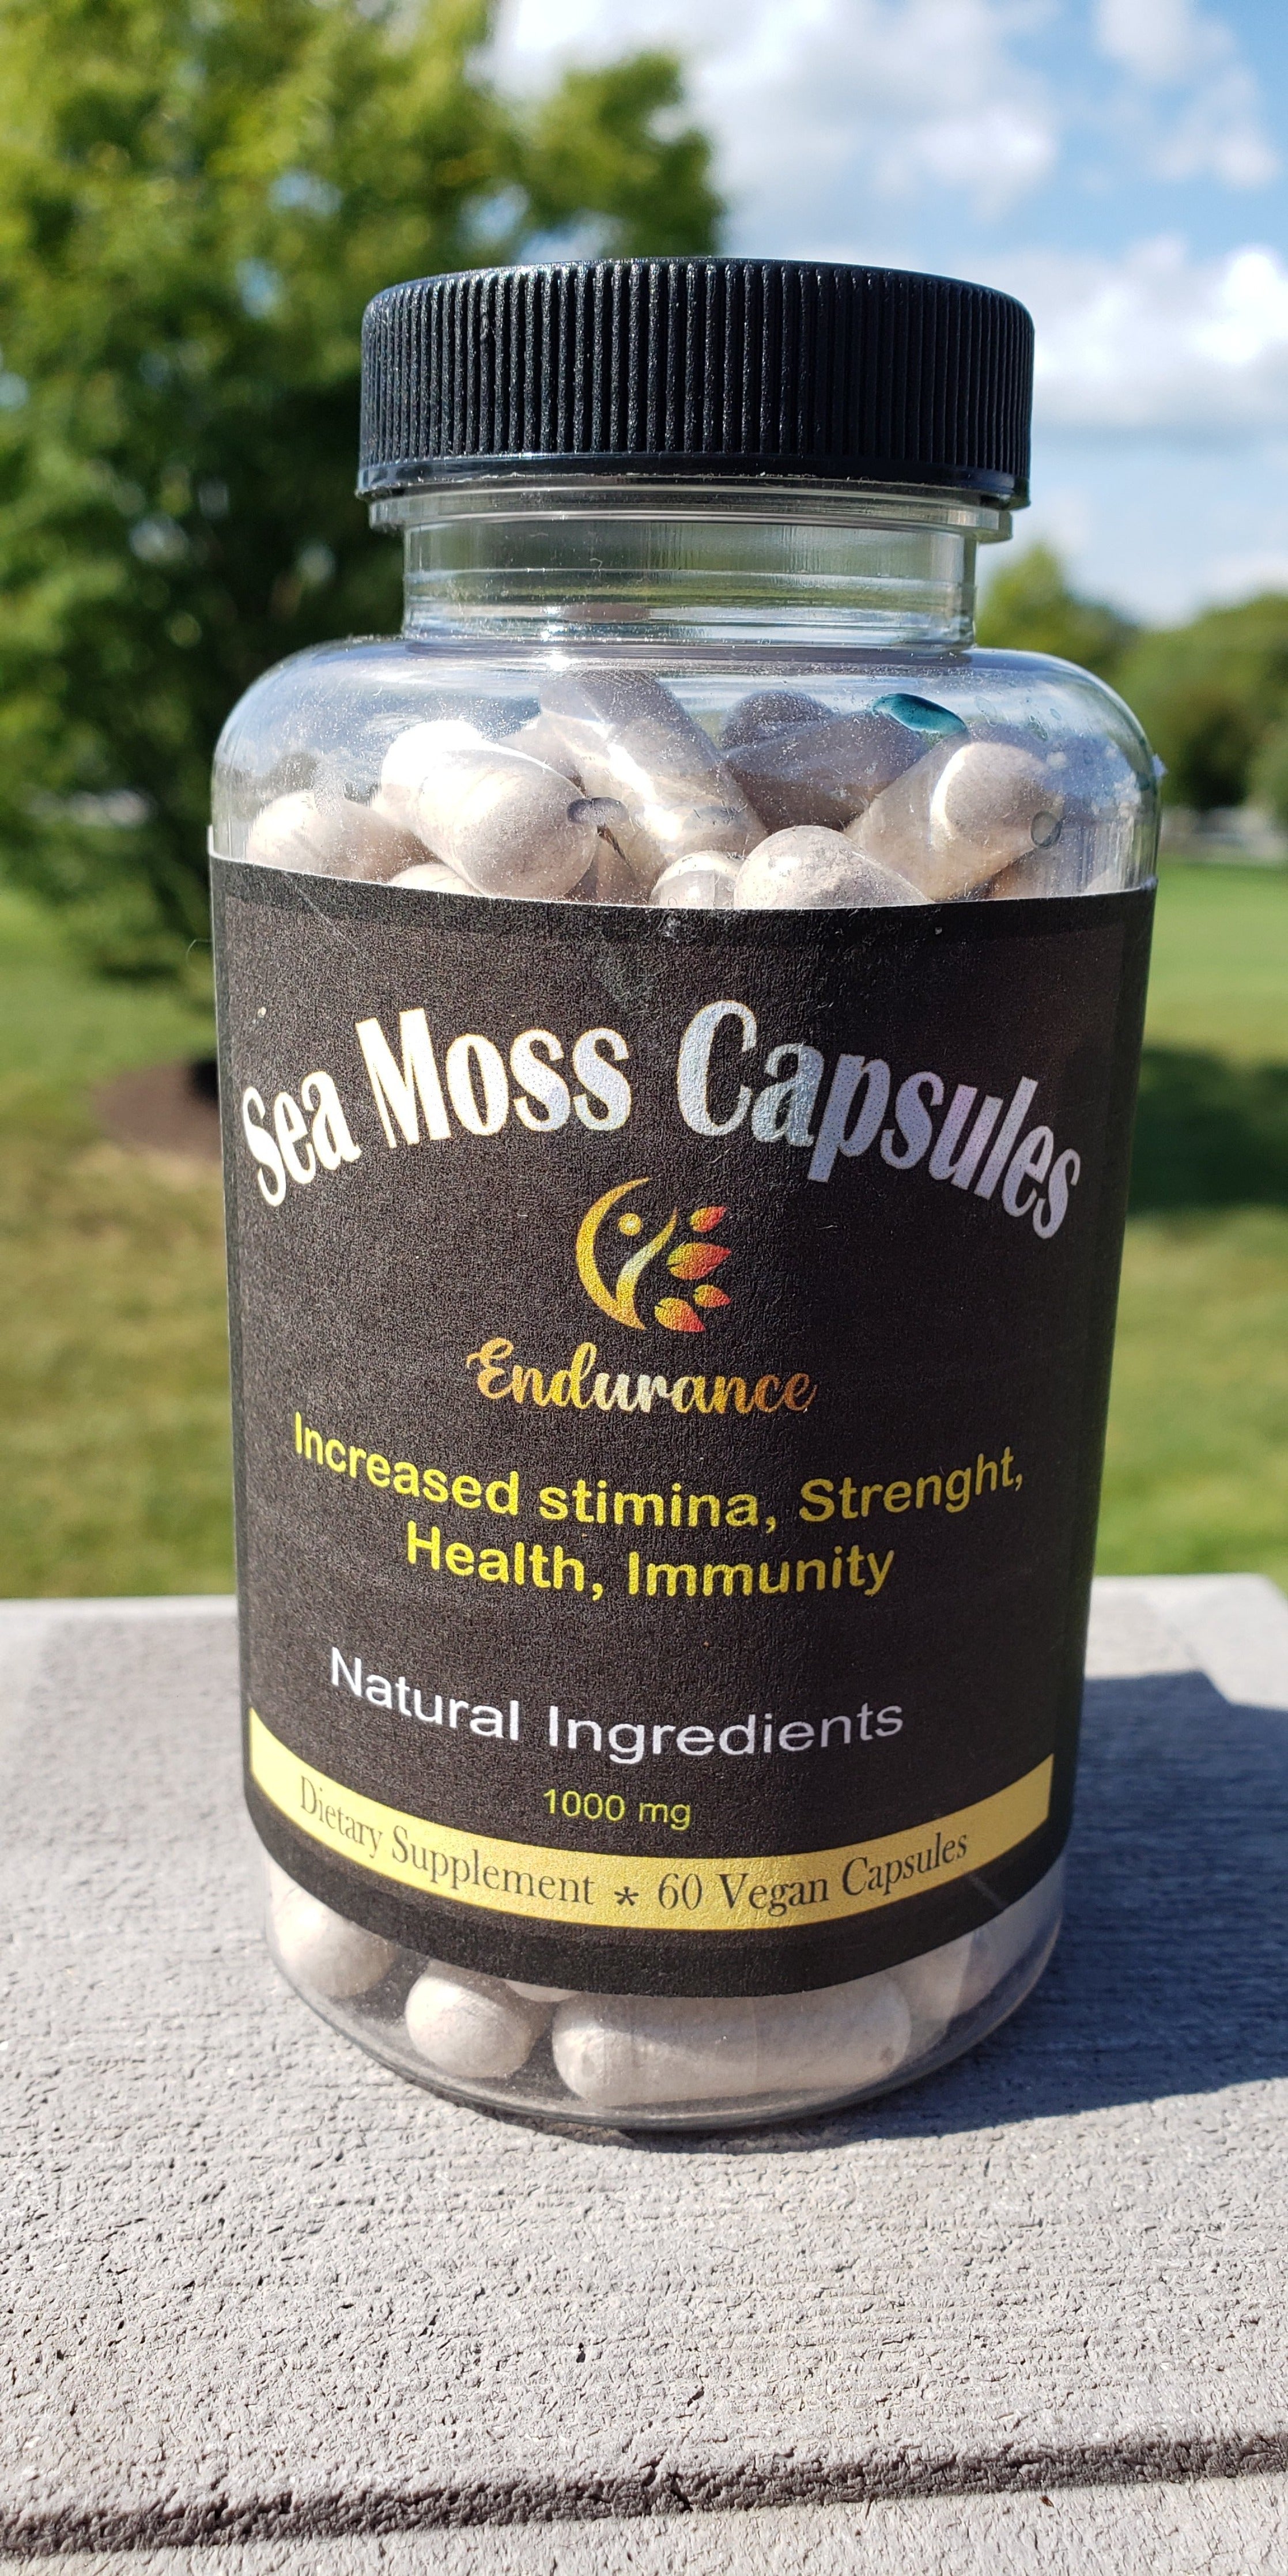 Bottle of Vegan sea moss capsules